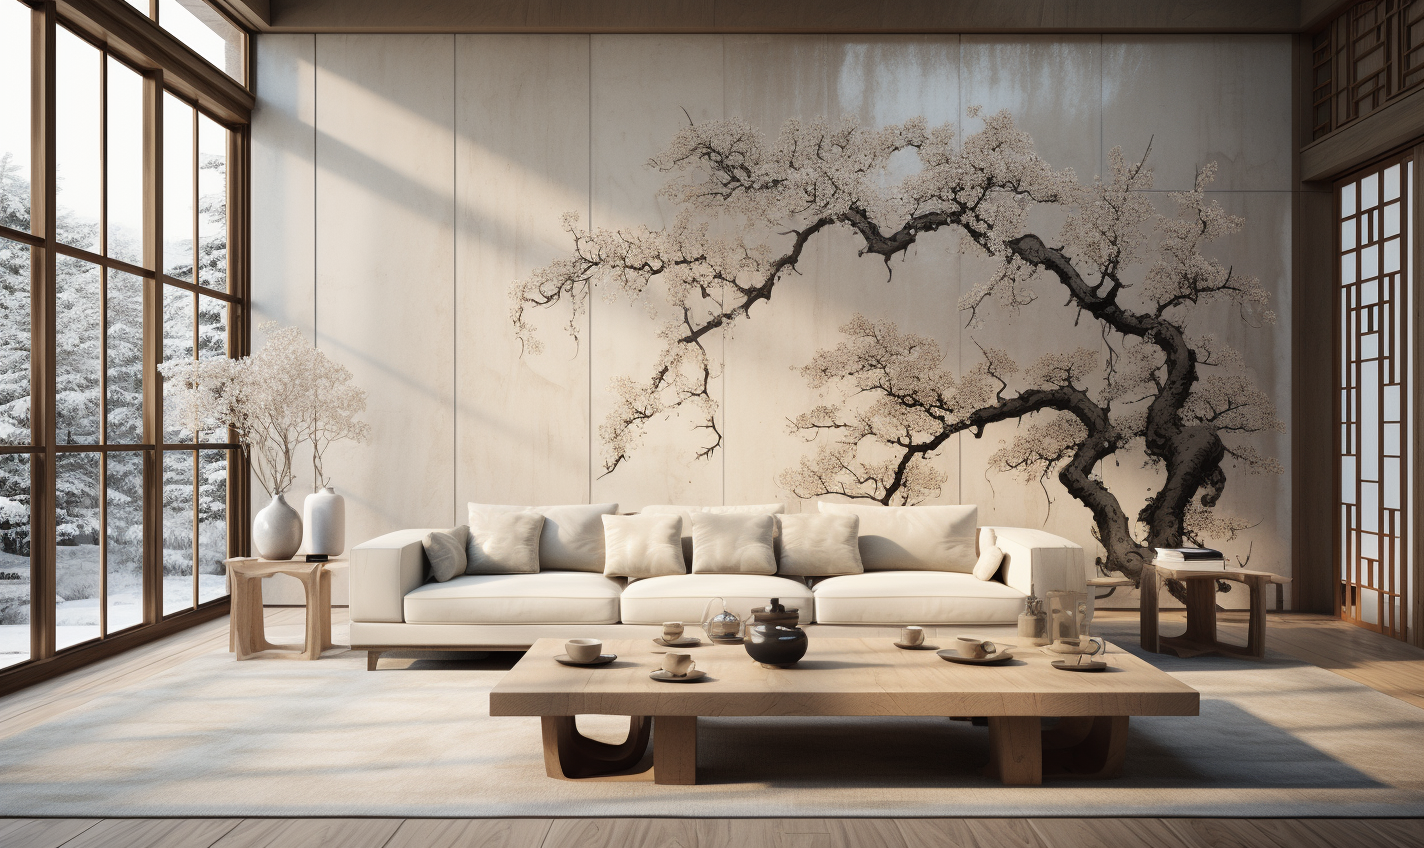 amitm modern Japanese interior design with Japanese art wallpa 60989f77 2ef3 443d 85d7 5bce9bbe3903 pattern design